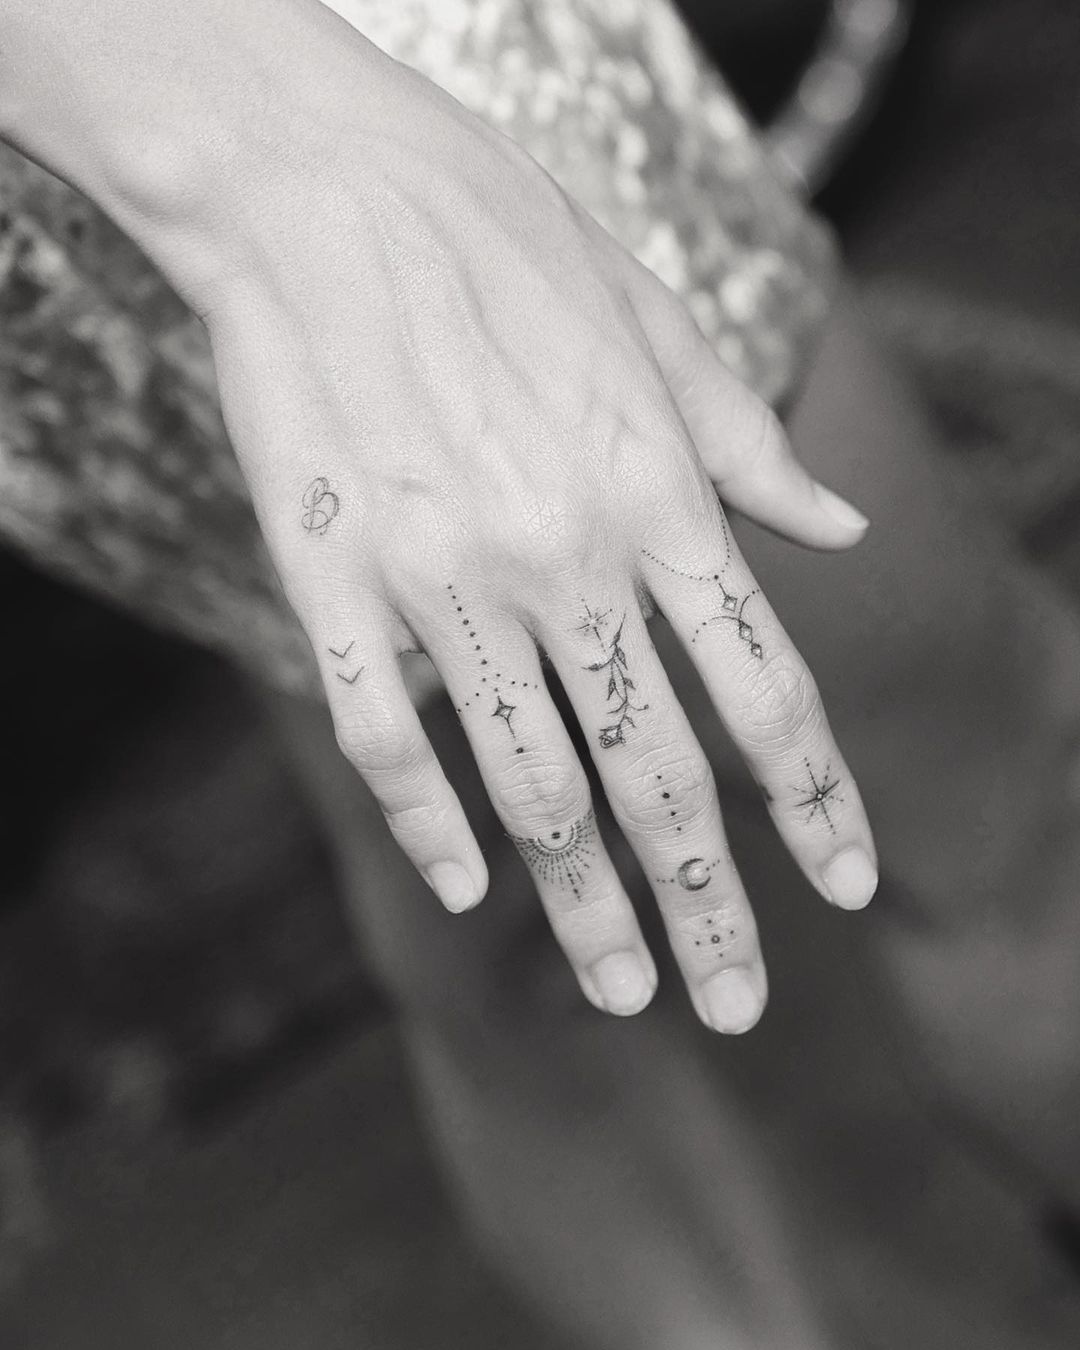 Women's unique finger tattoos - Finger Adornments